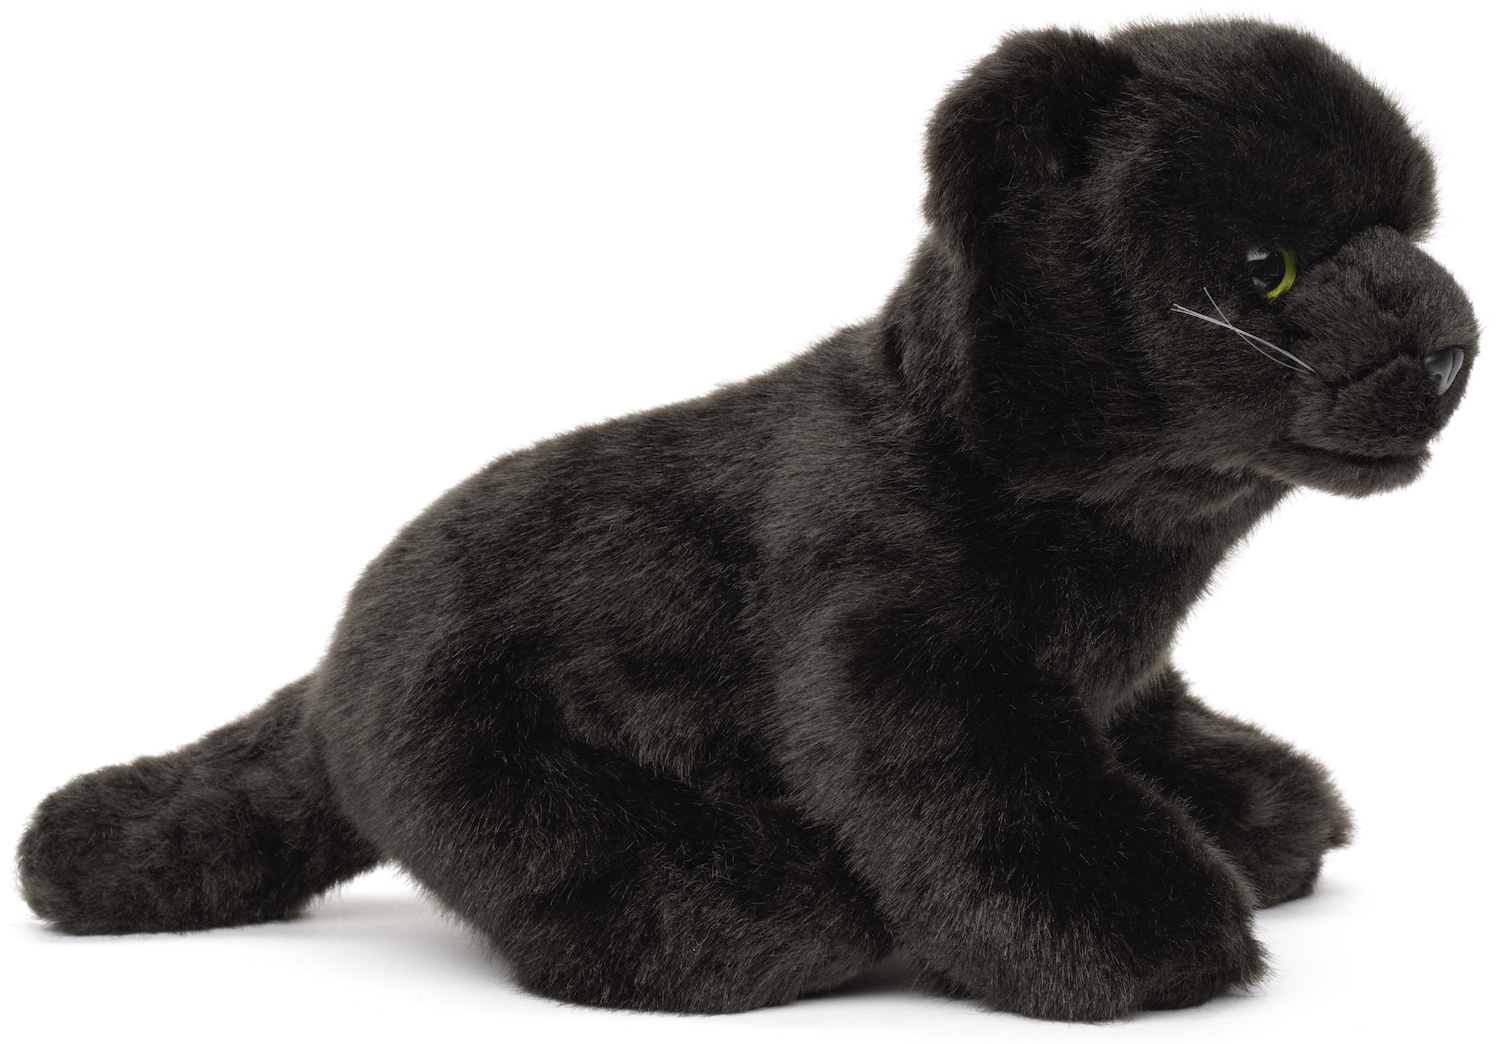 Black Panther Baby, sitting - 25 cm (length)